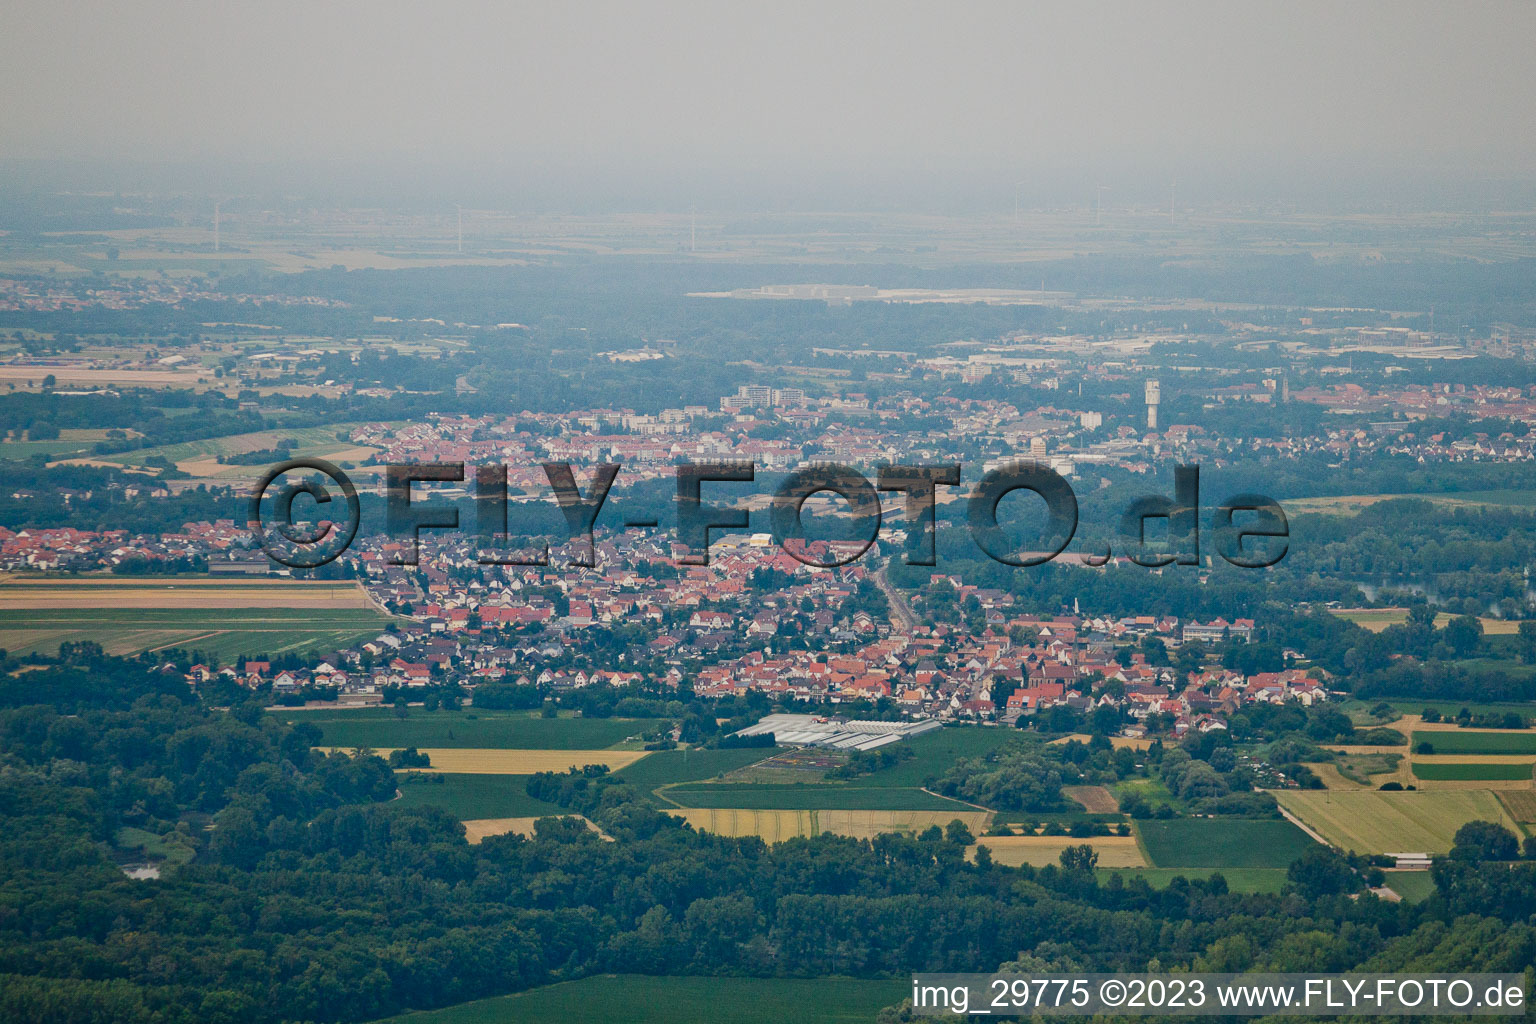 Aerial view of District Sondernheim in Germersheim in the state Rhineland-Palatinate, Germany